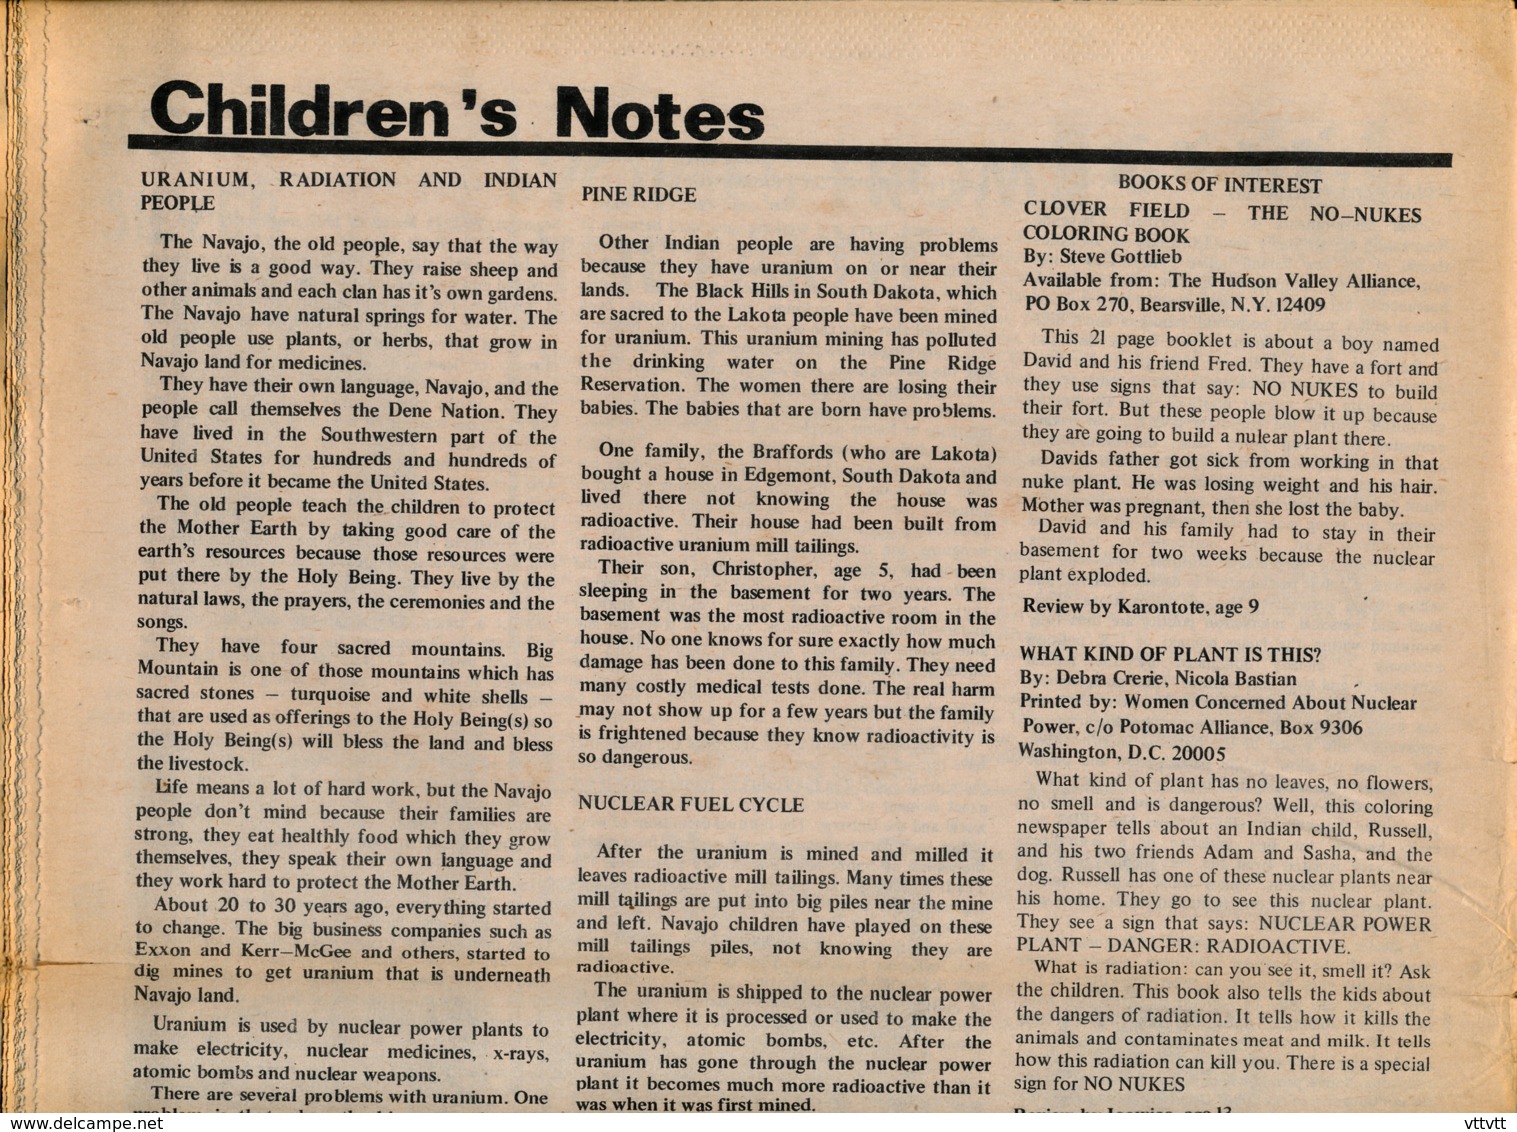 AKWESASNE NOTES (Mai 1980), Volume 12, Numéro 2, Newspaper Indian, Journal Indien, Mohwak, Ontario, New-York, 36 Pages - History